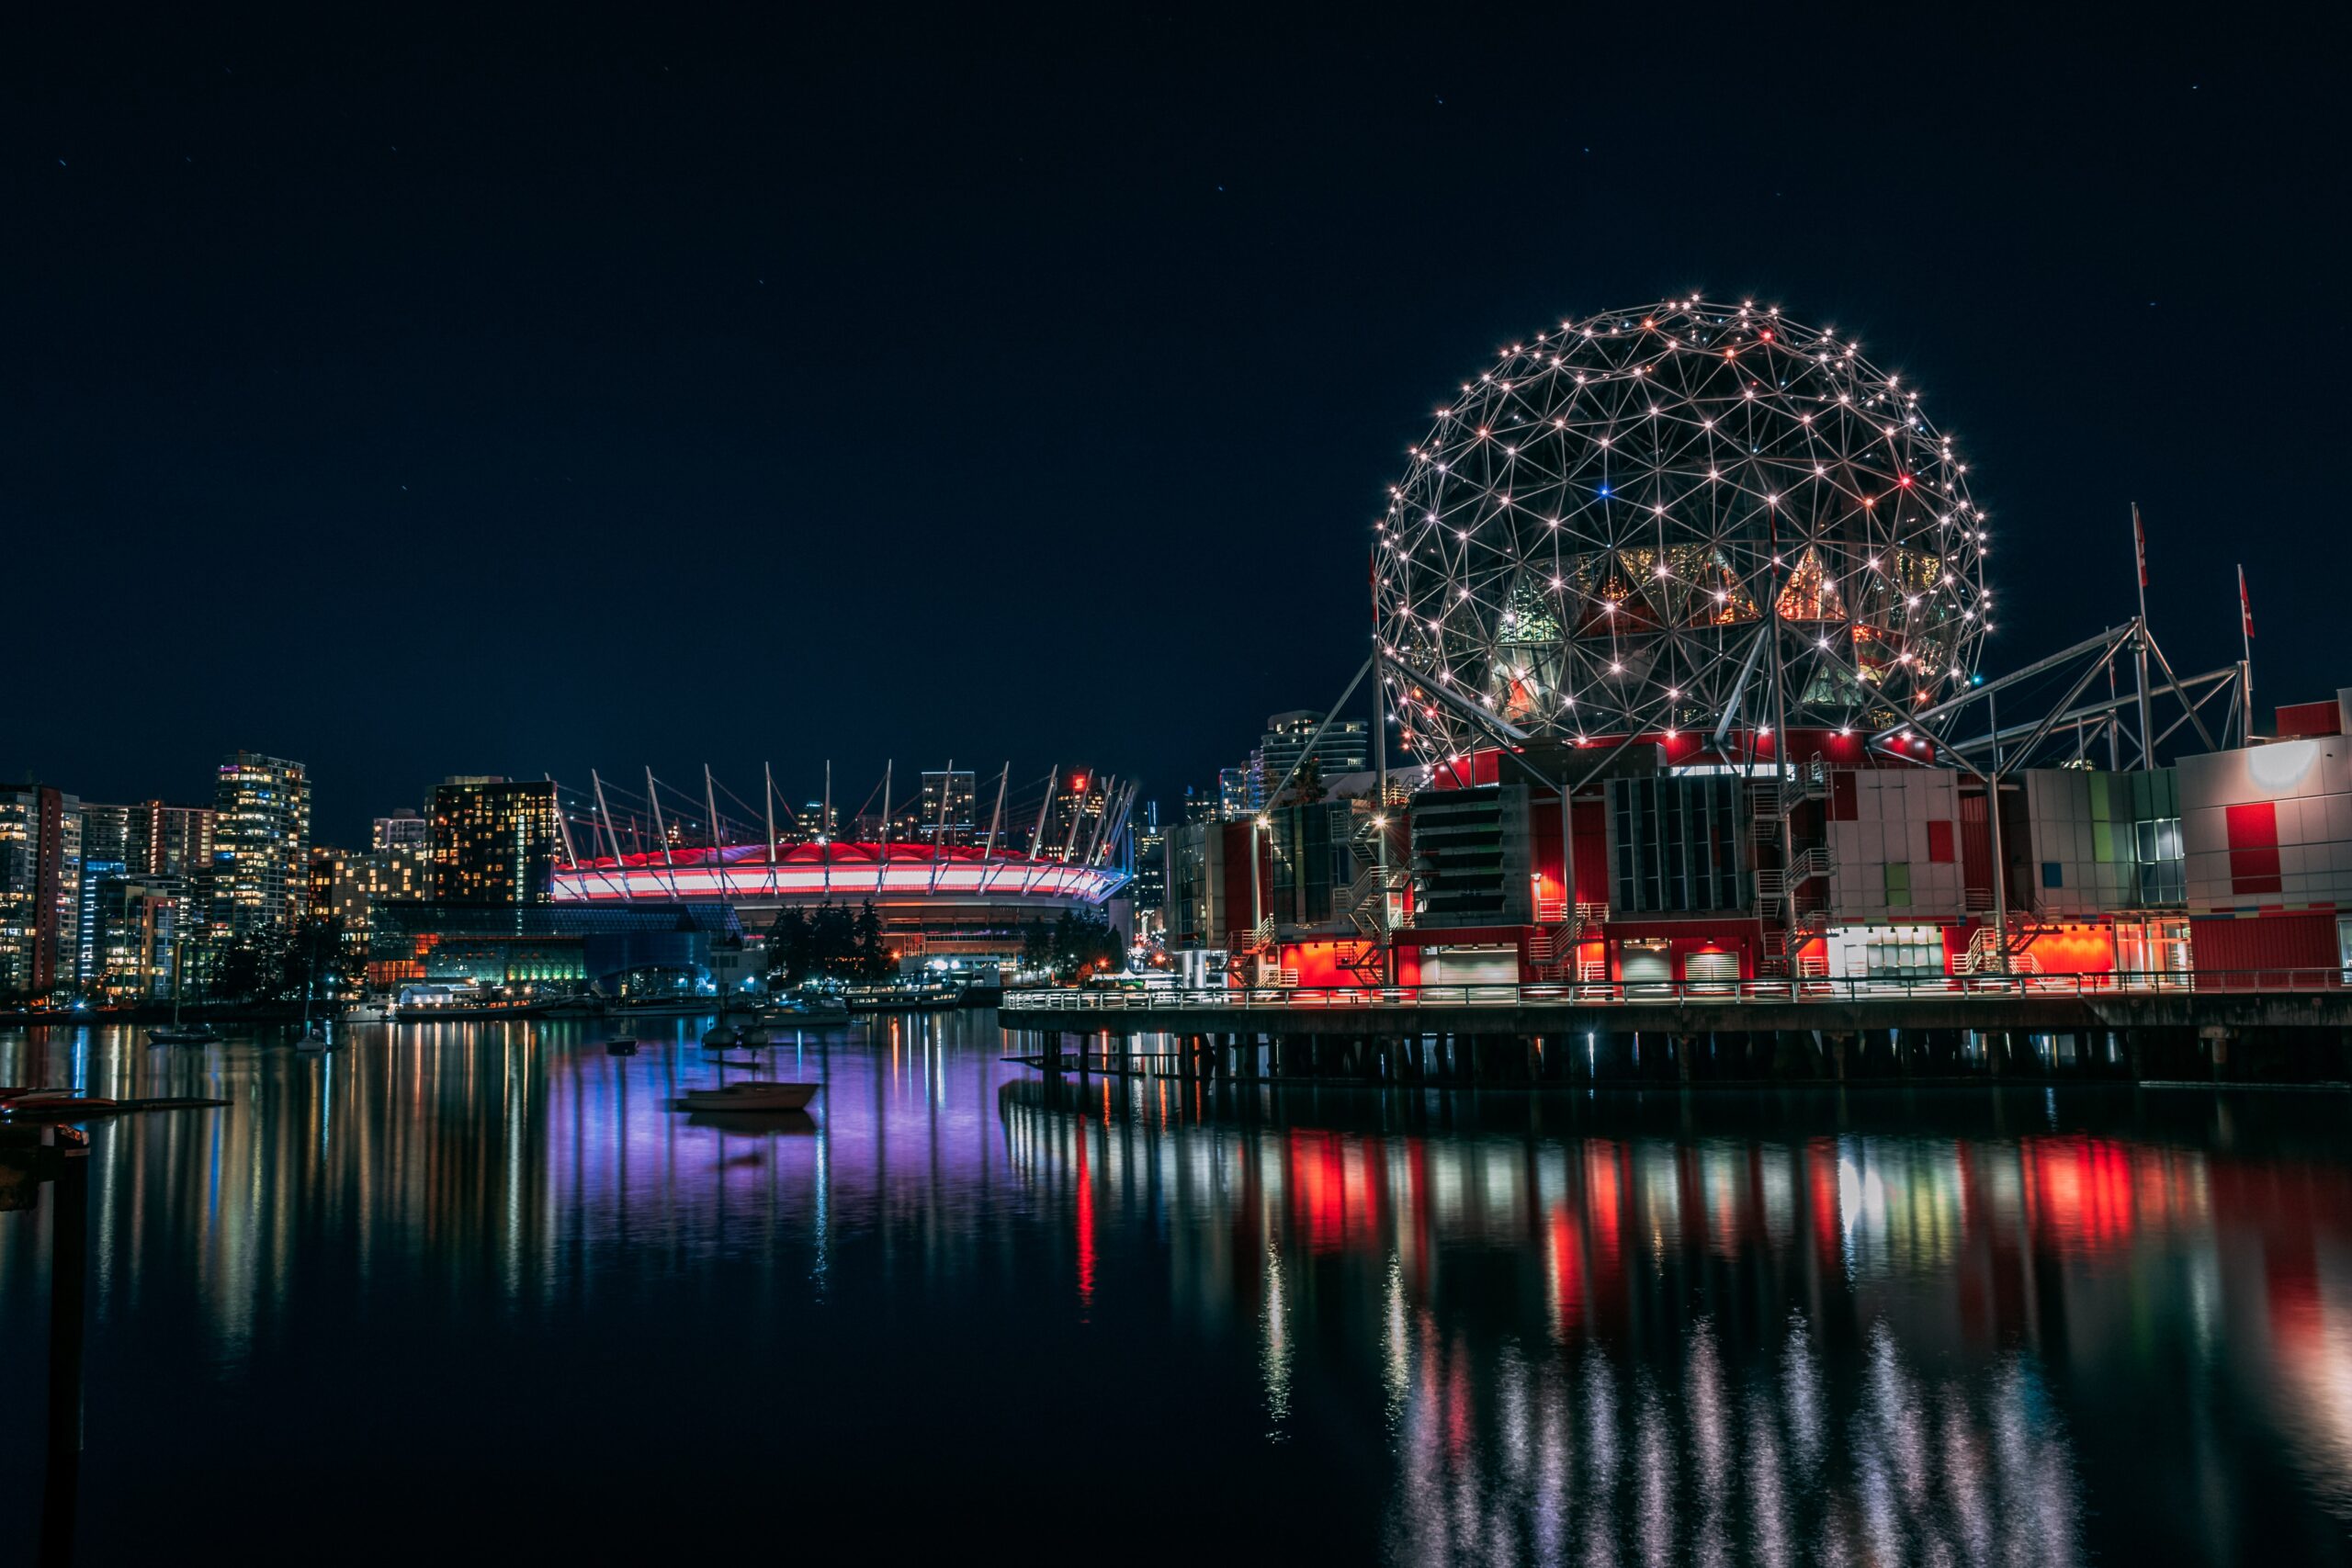 View of the Vancouver stadium by Aditya Chinchure on Unplash